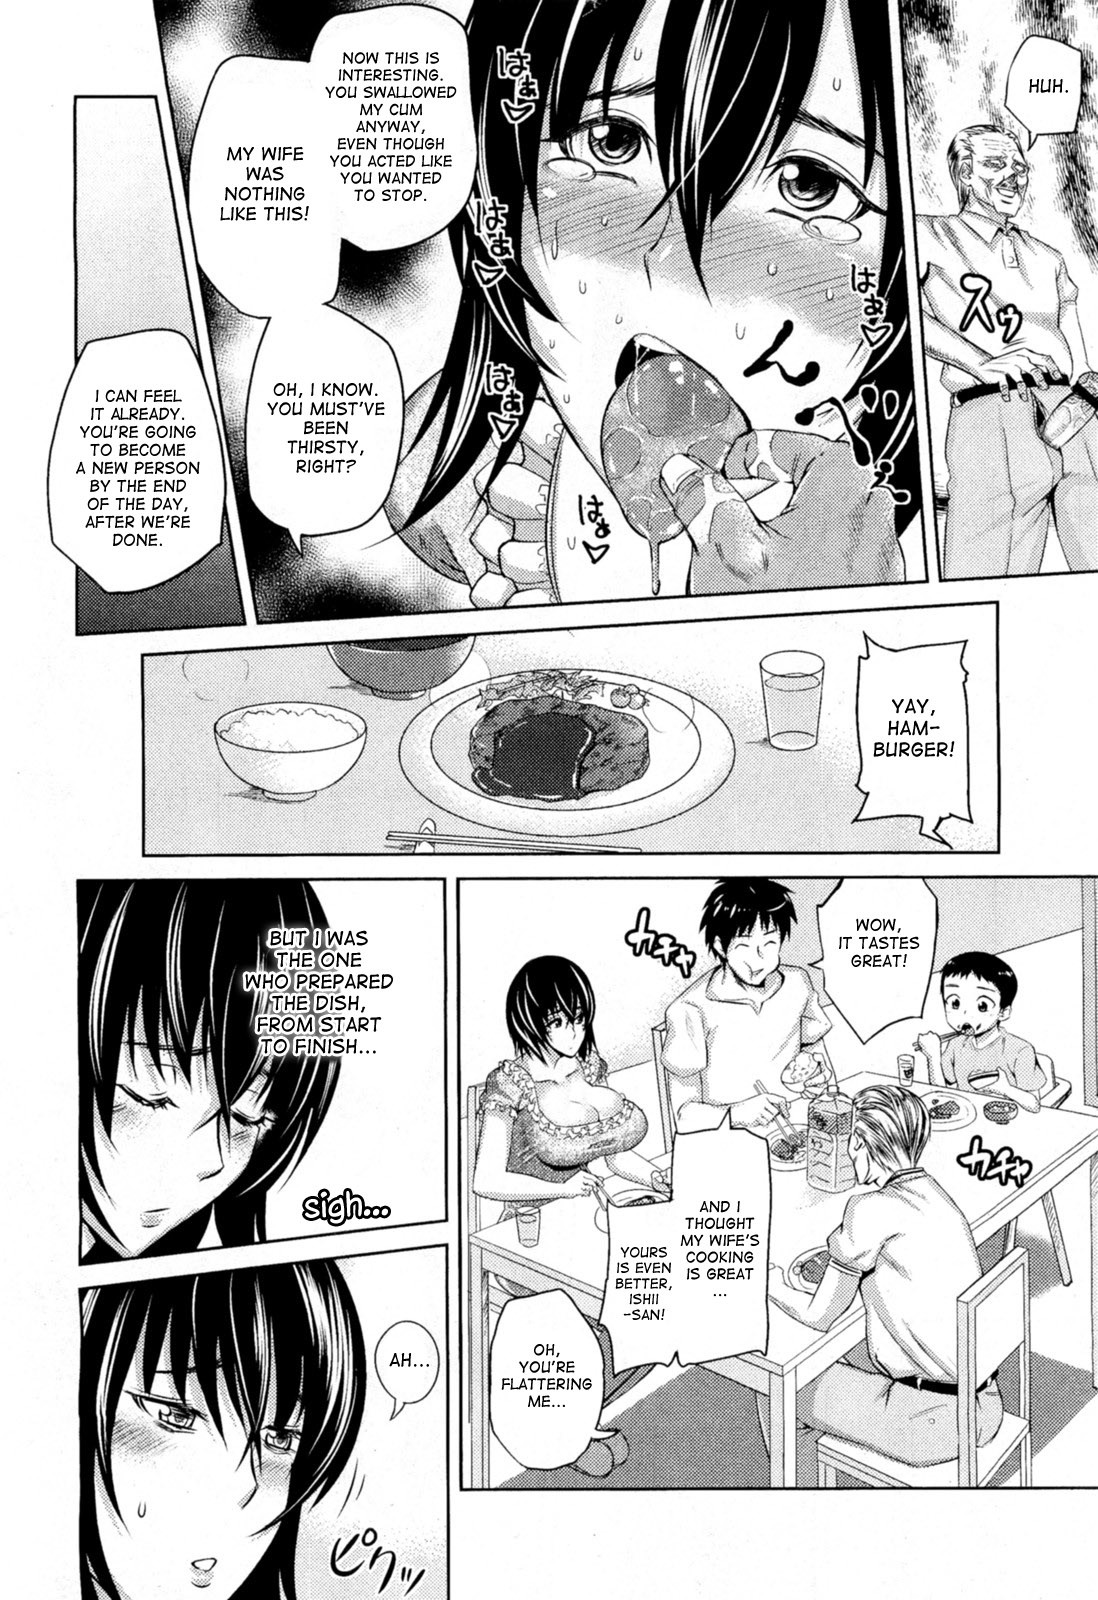 Read [uruujima] Good Wife Wise Mother Hentai Online Porn Manga And Doujinshi